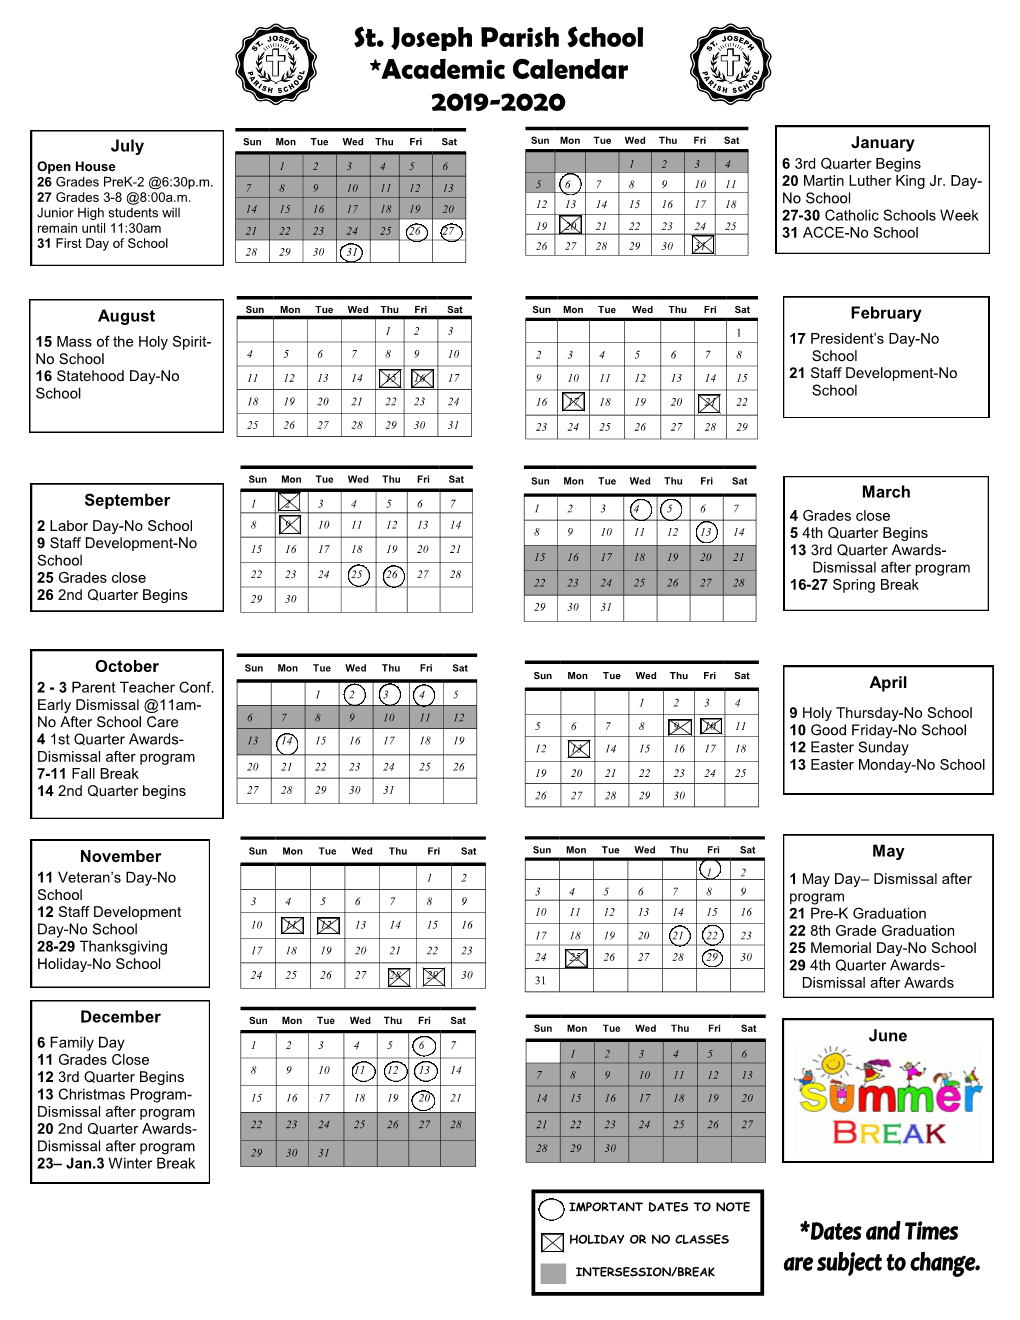 St. Joseph Parish School *Academic Calendar 2019-2020